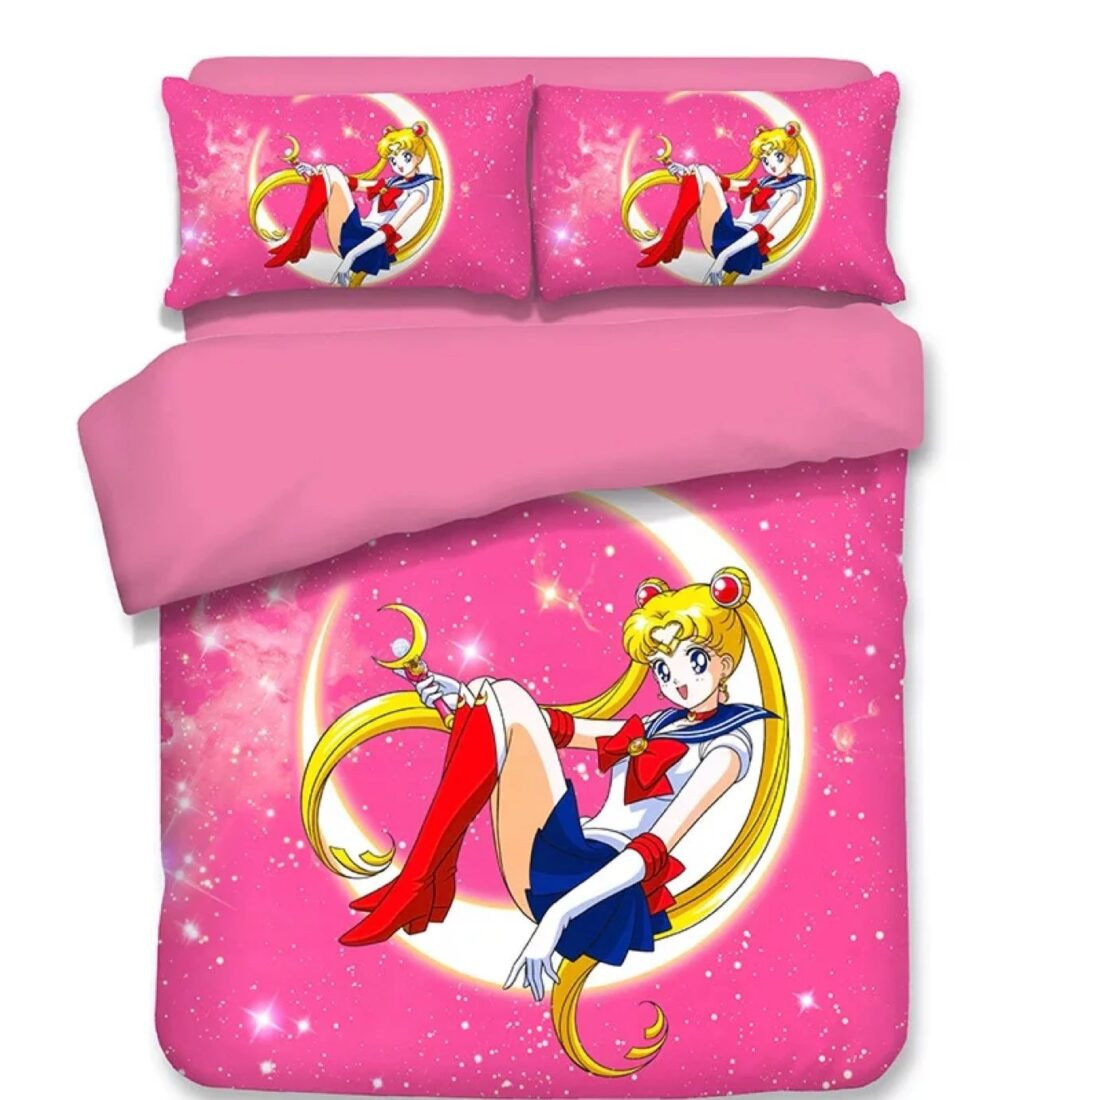 Sailor Moon 13 Duvet Cover Set - Bedding Set